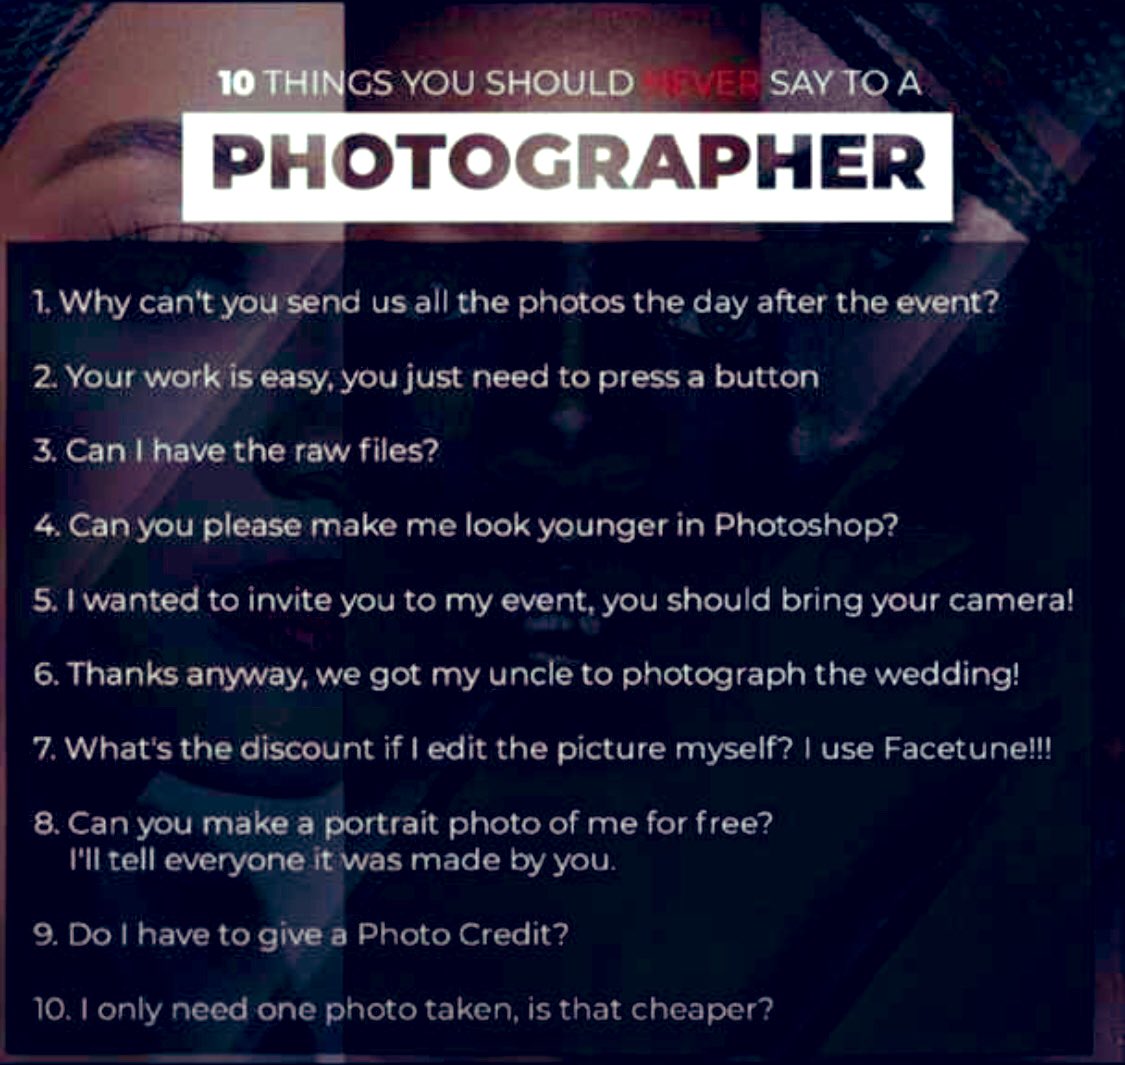 Pls take note....and be guided 
#photography #SayNoToSocialMediaBill #photo #PhotoNews #photographer